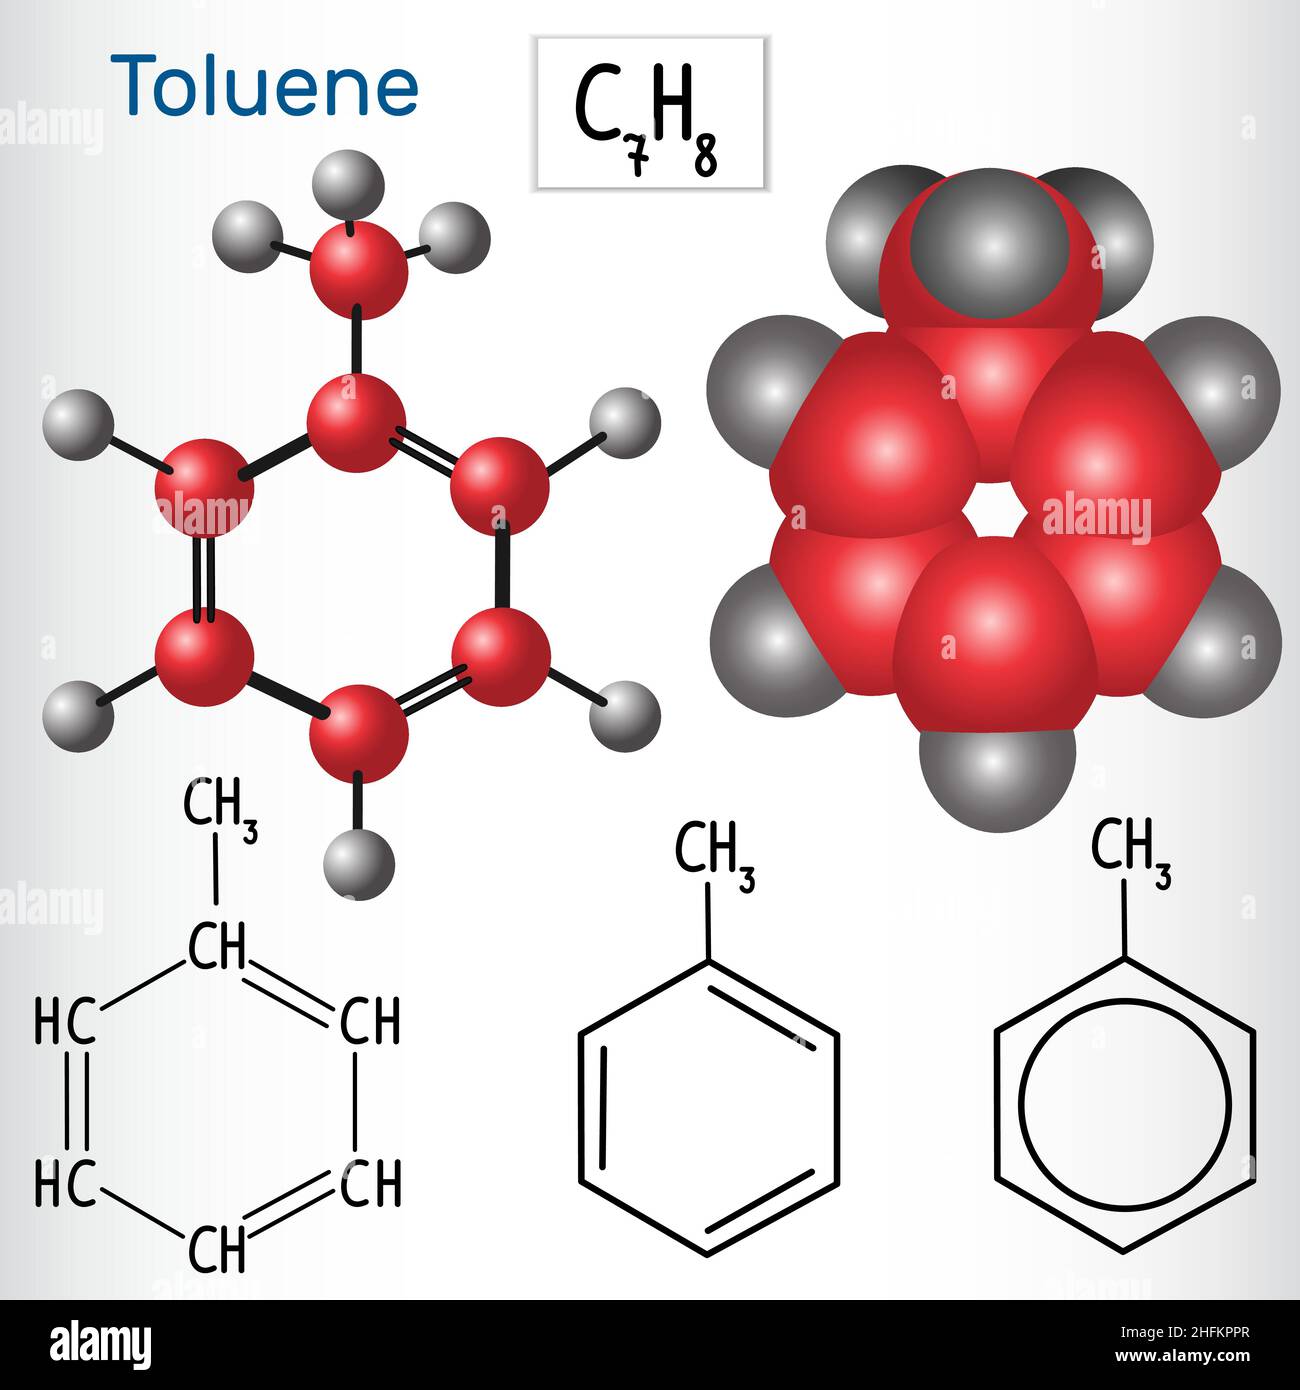 Toluene molecule - structural chemical formula and model. Vector illustration Stock Vector